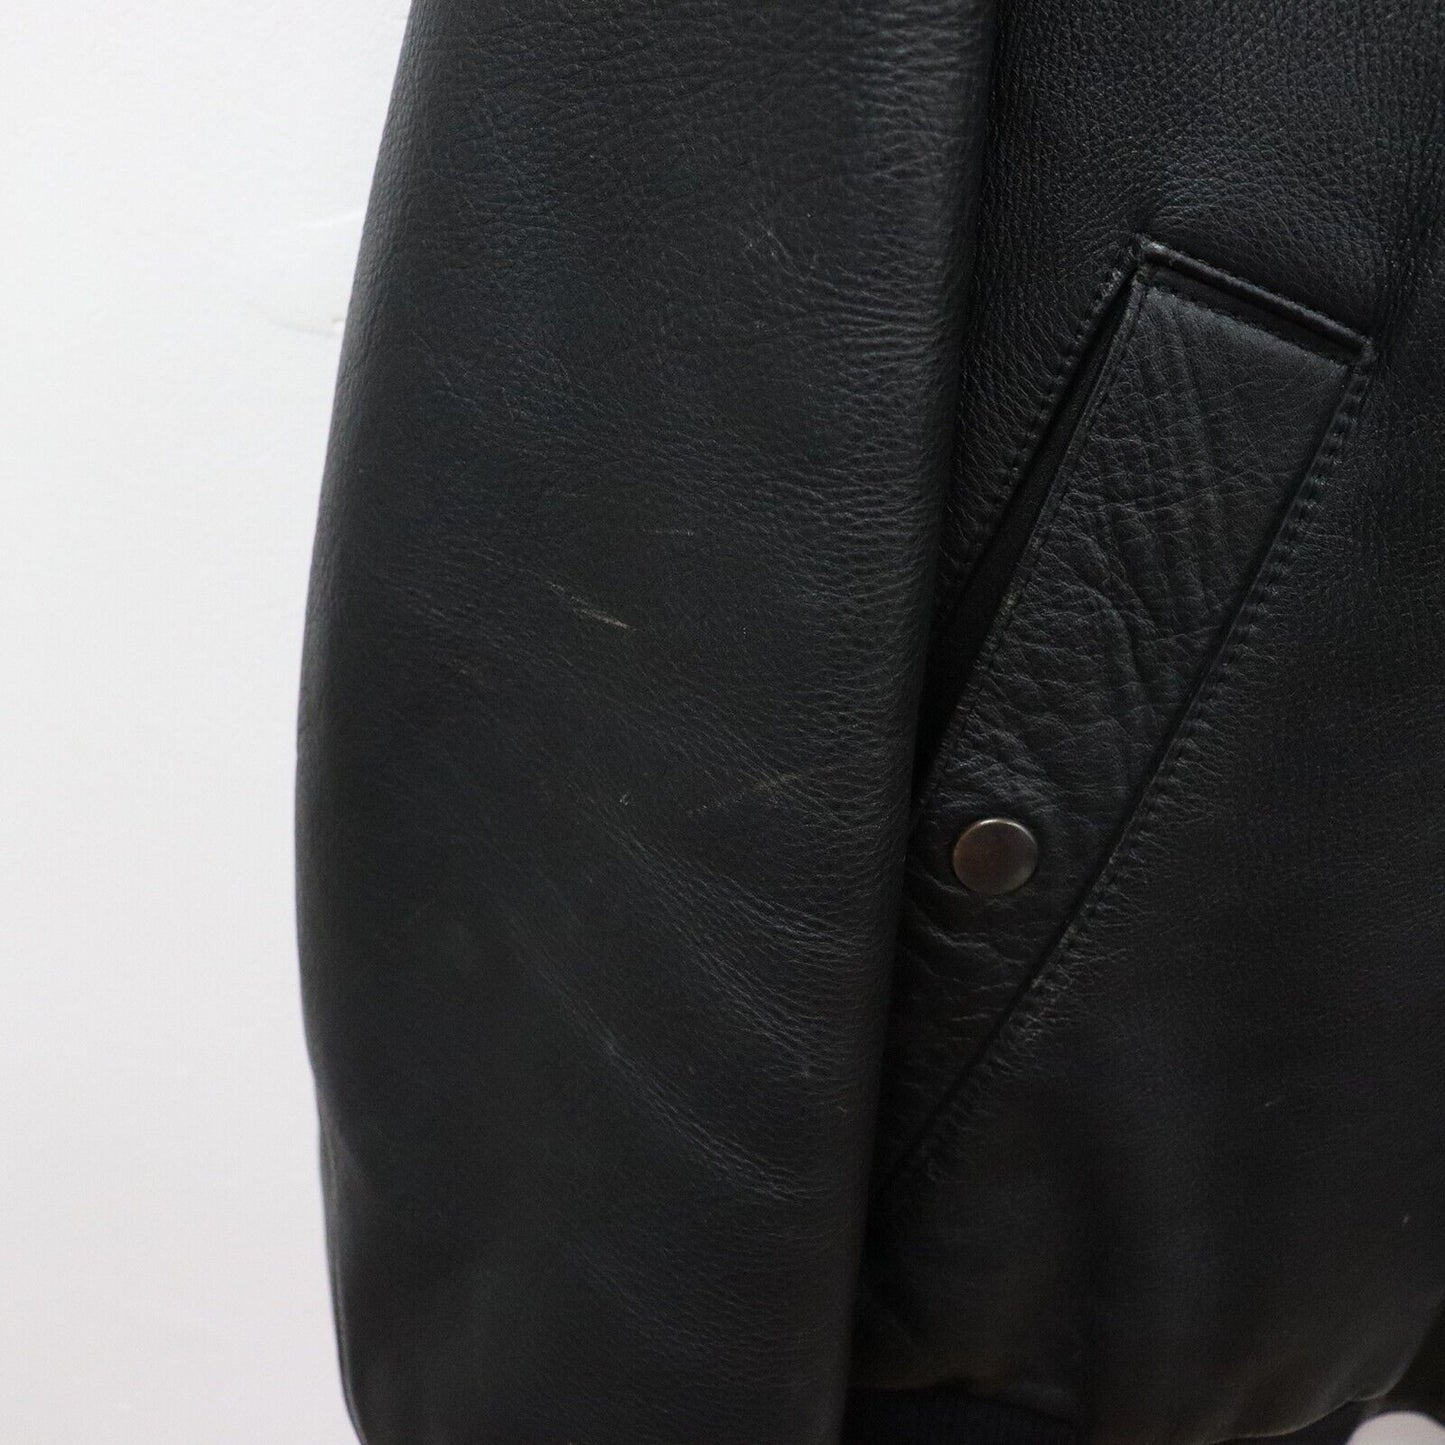 Vintage Leather Bomber Jacket Size XL